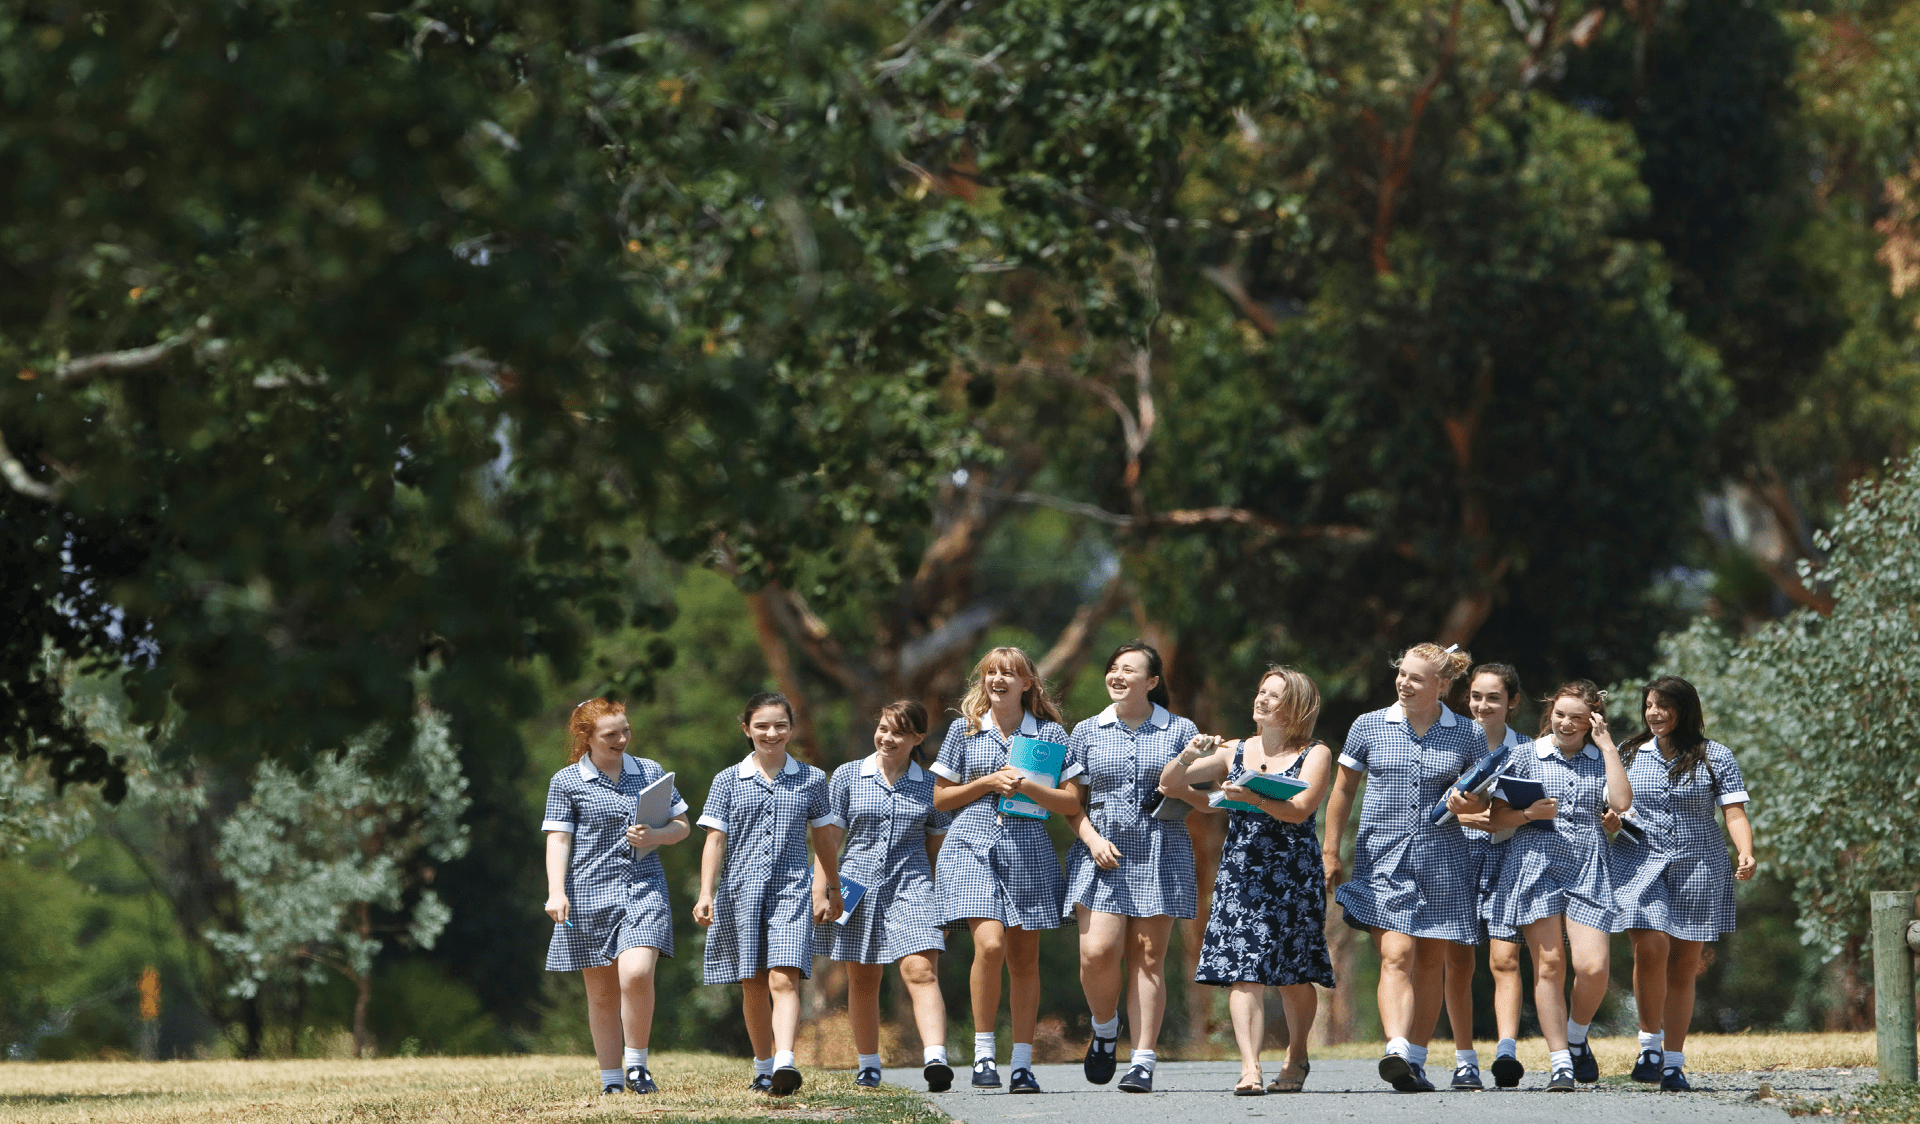 School students walking with teacher through an urban park on an excursion